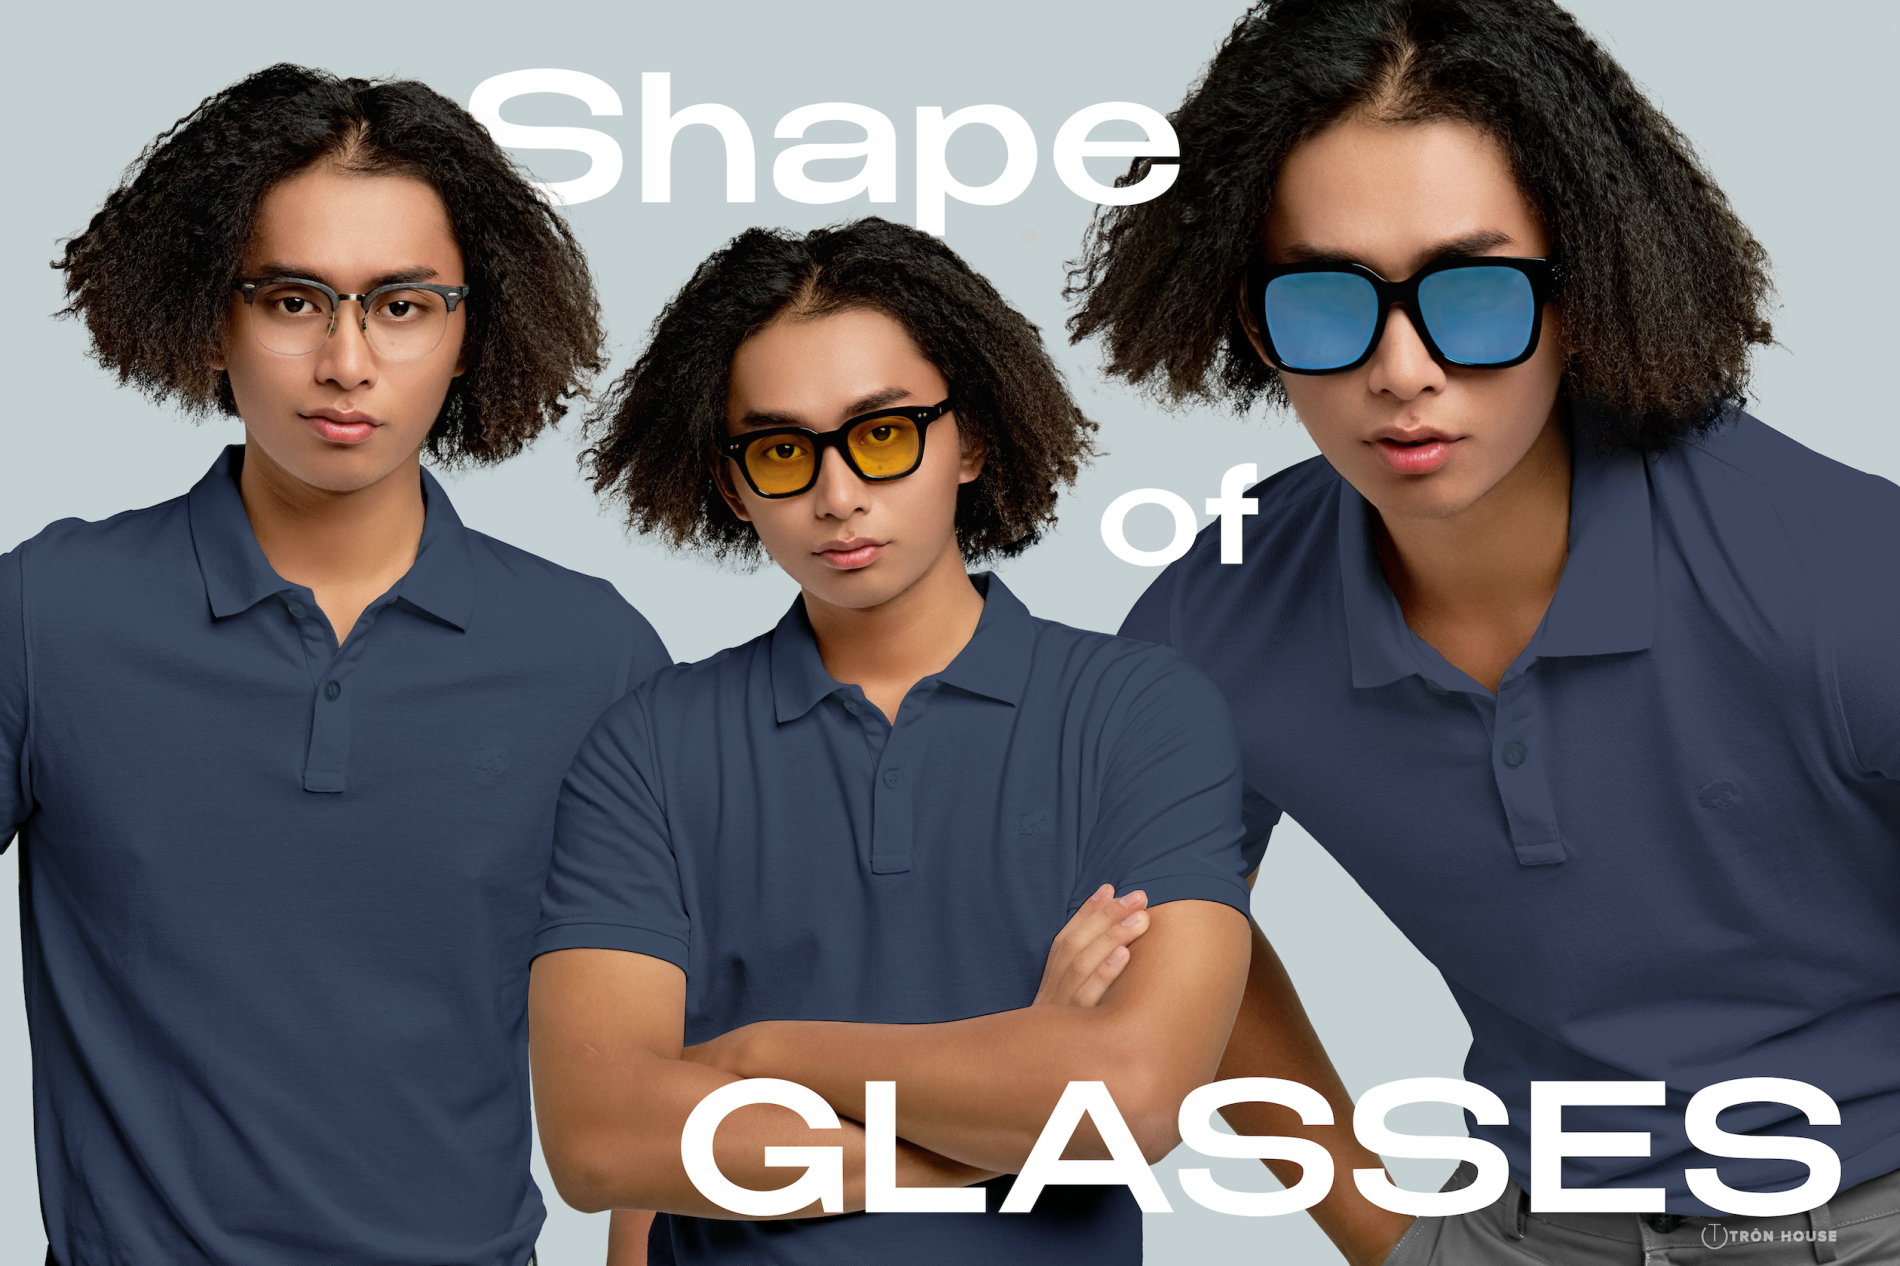 Shape of GLASSES